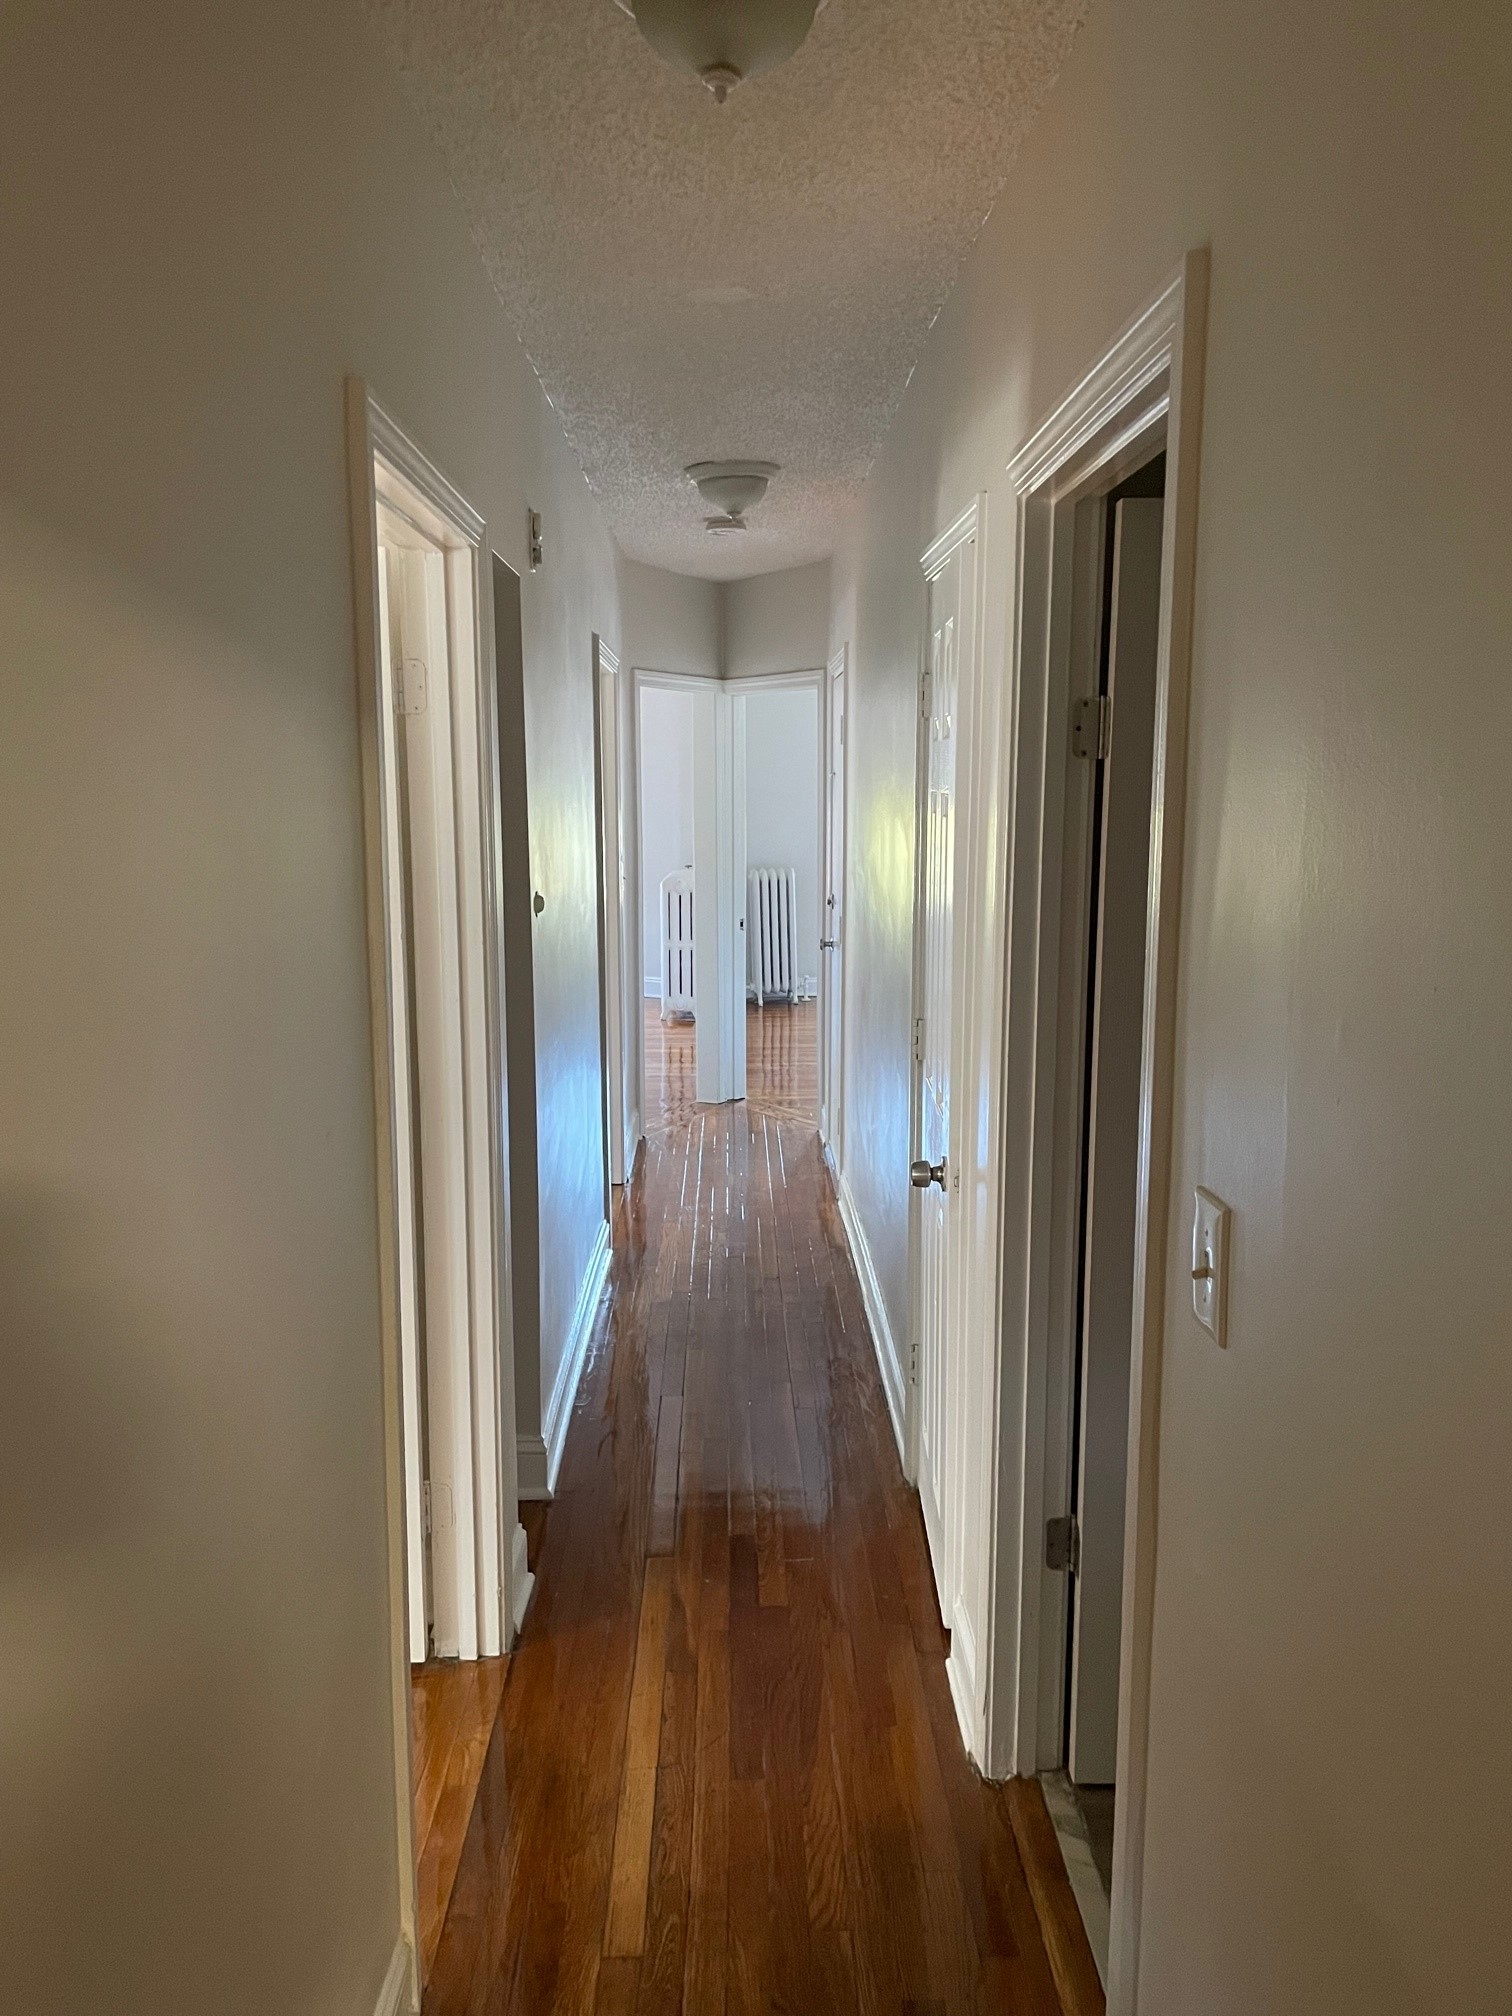 Photos of apartment on Walnut,Boston MA 02119